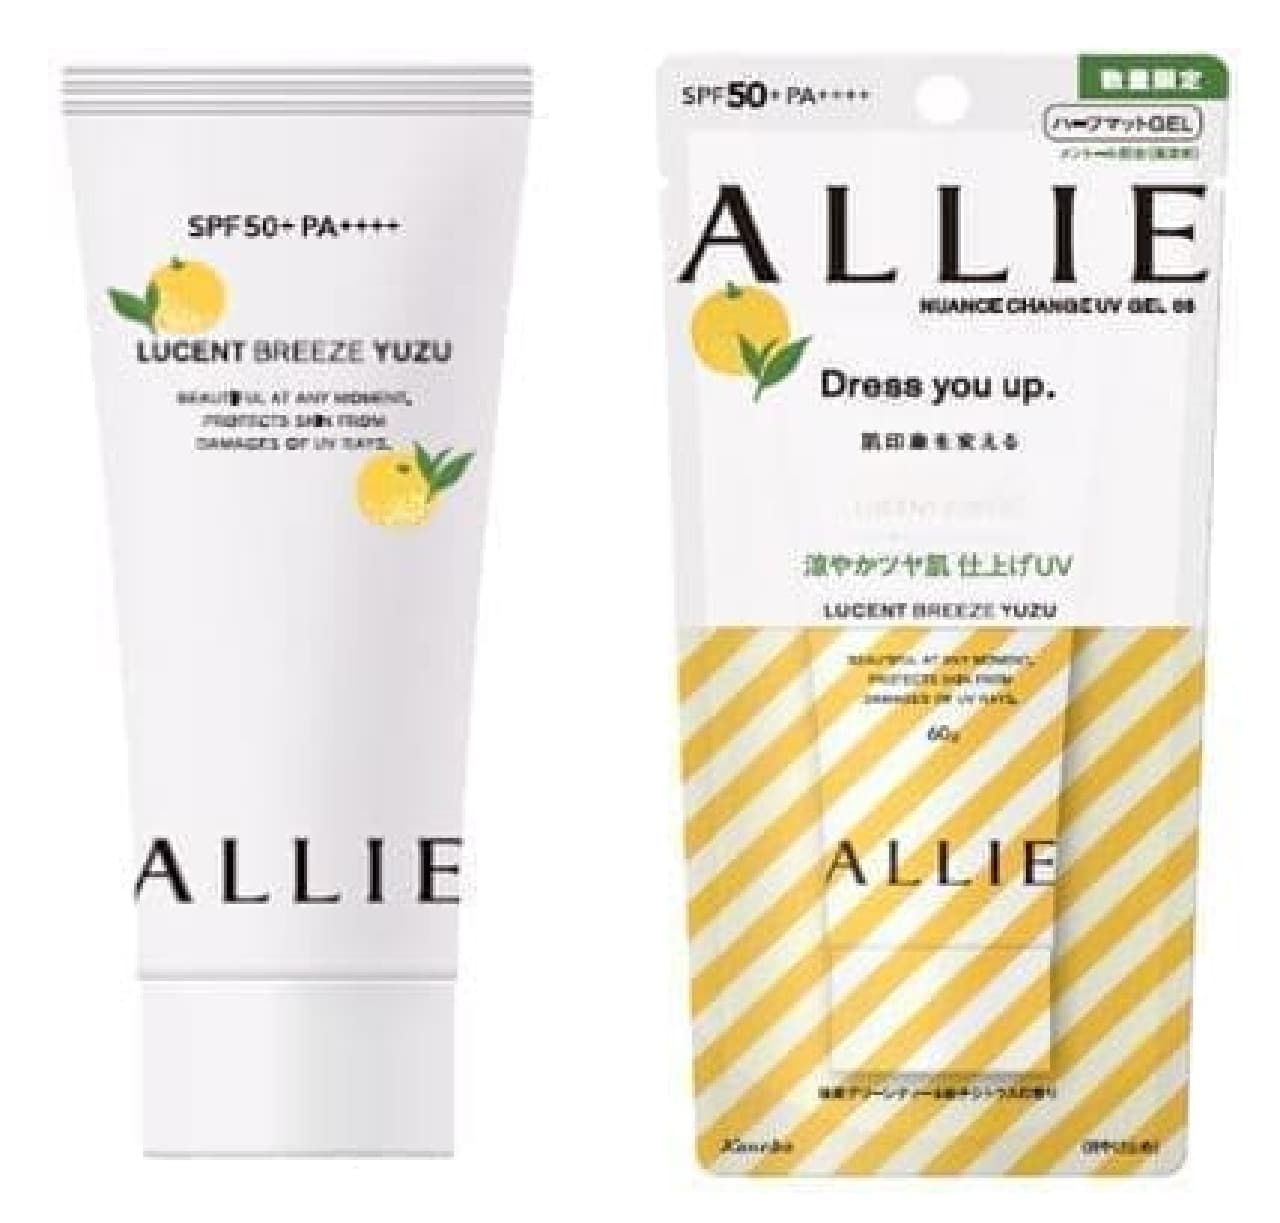 Allie Nuance Change UV Gel CL m Matcha Green Tea & Yuzu Citrus Fragrance